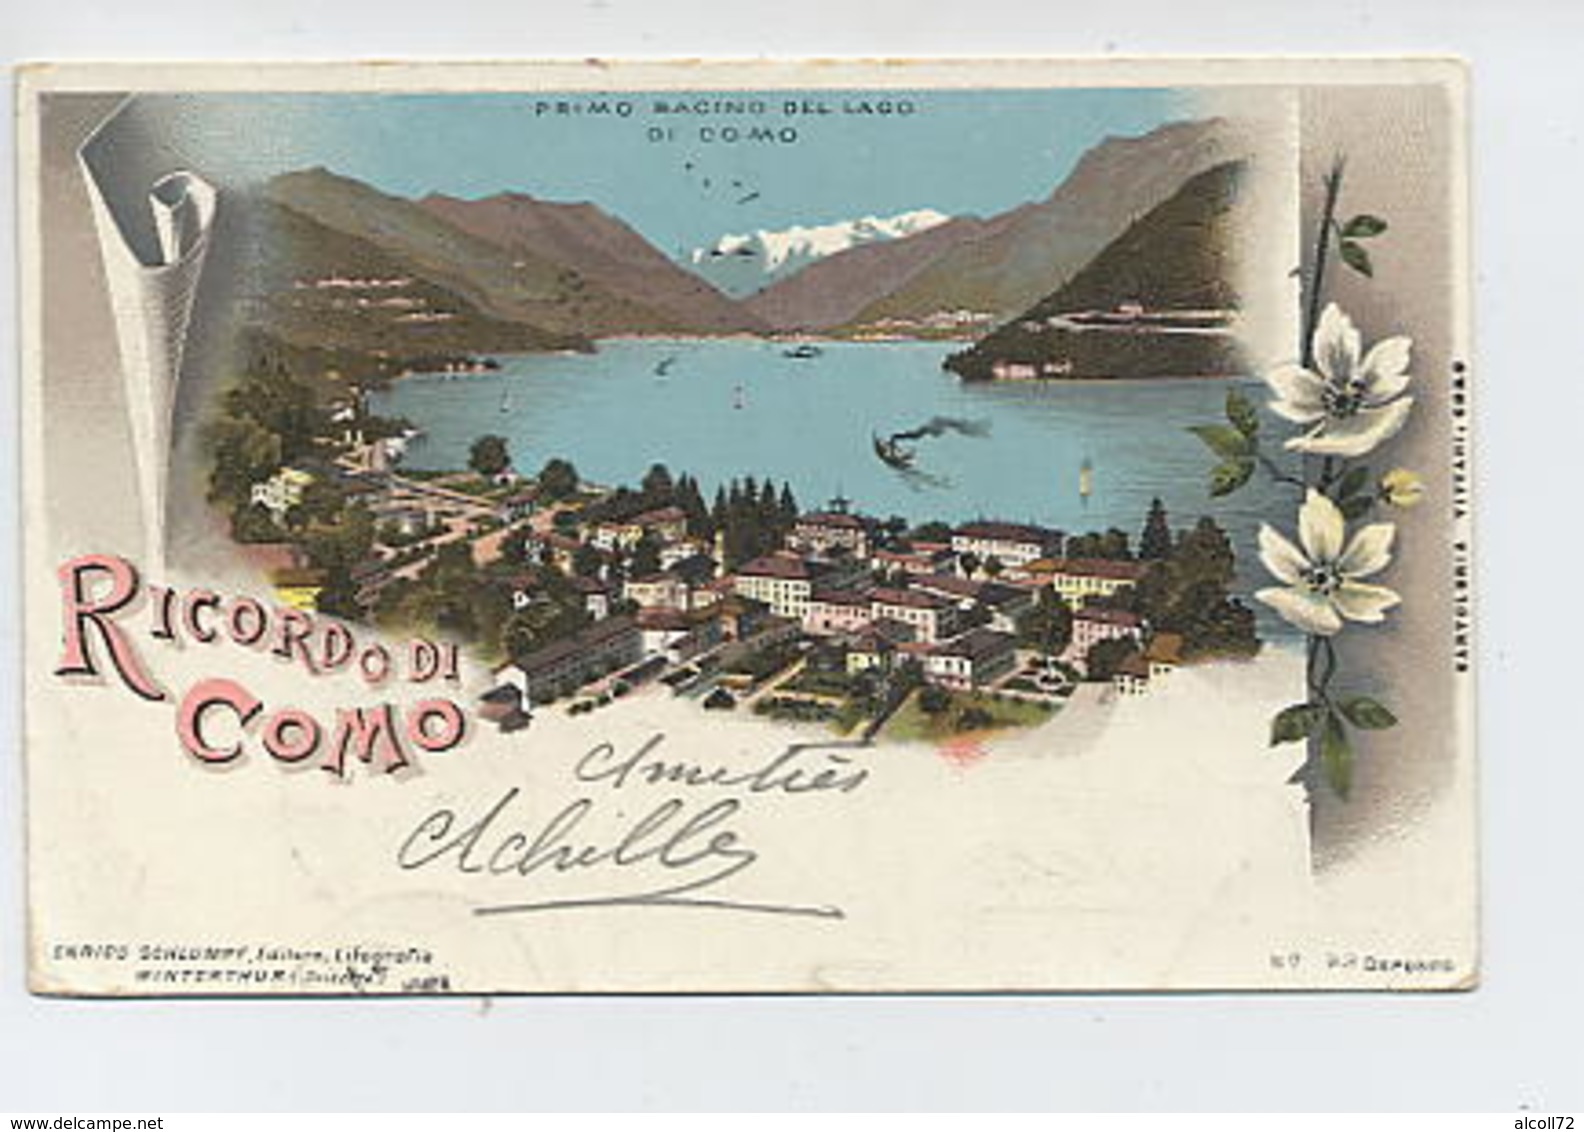 Primo Bacino Del Lago Di Como-Ricordo Di Como. - Como